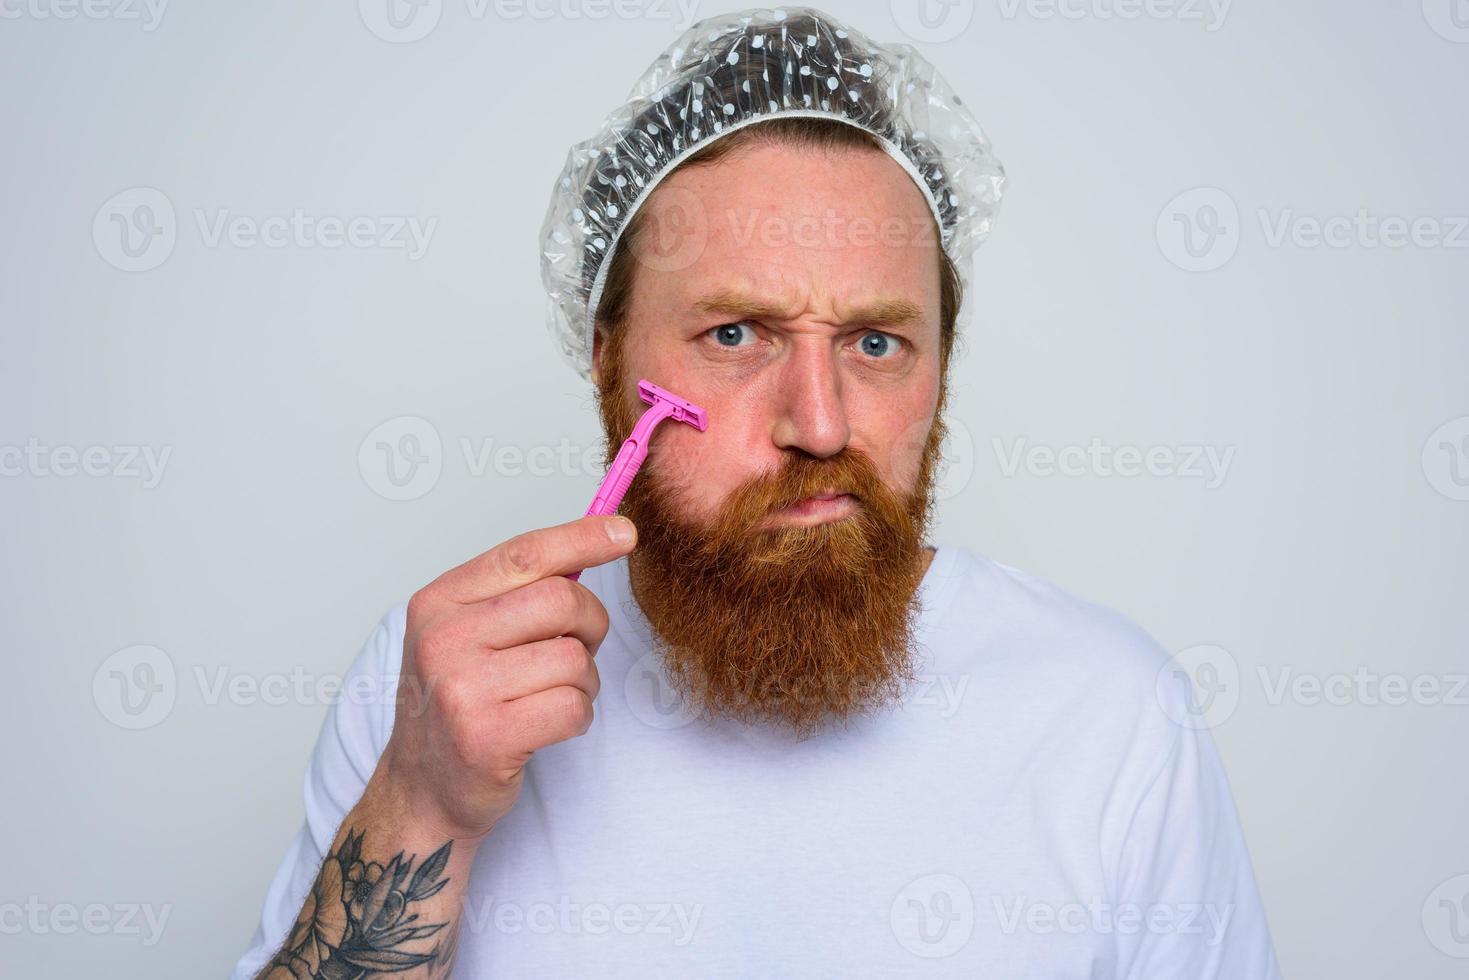 Man adjust the beard with a razor blade photo